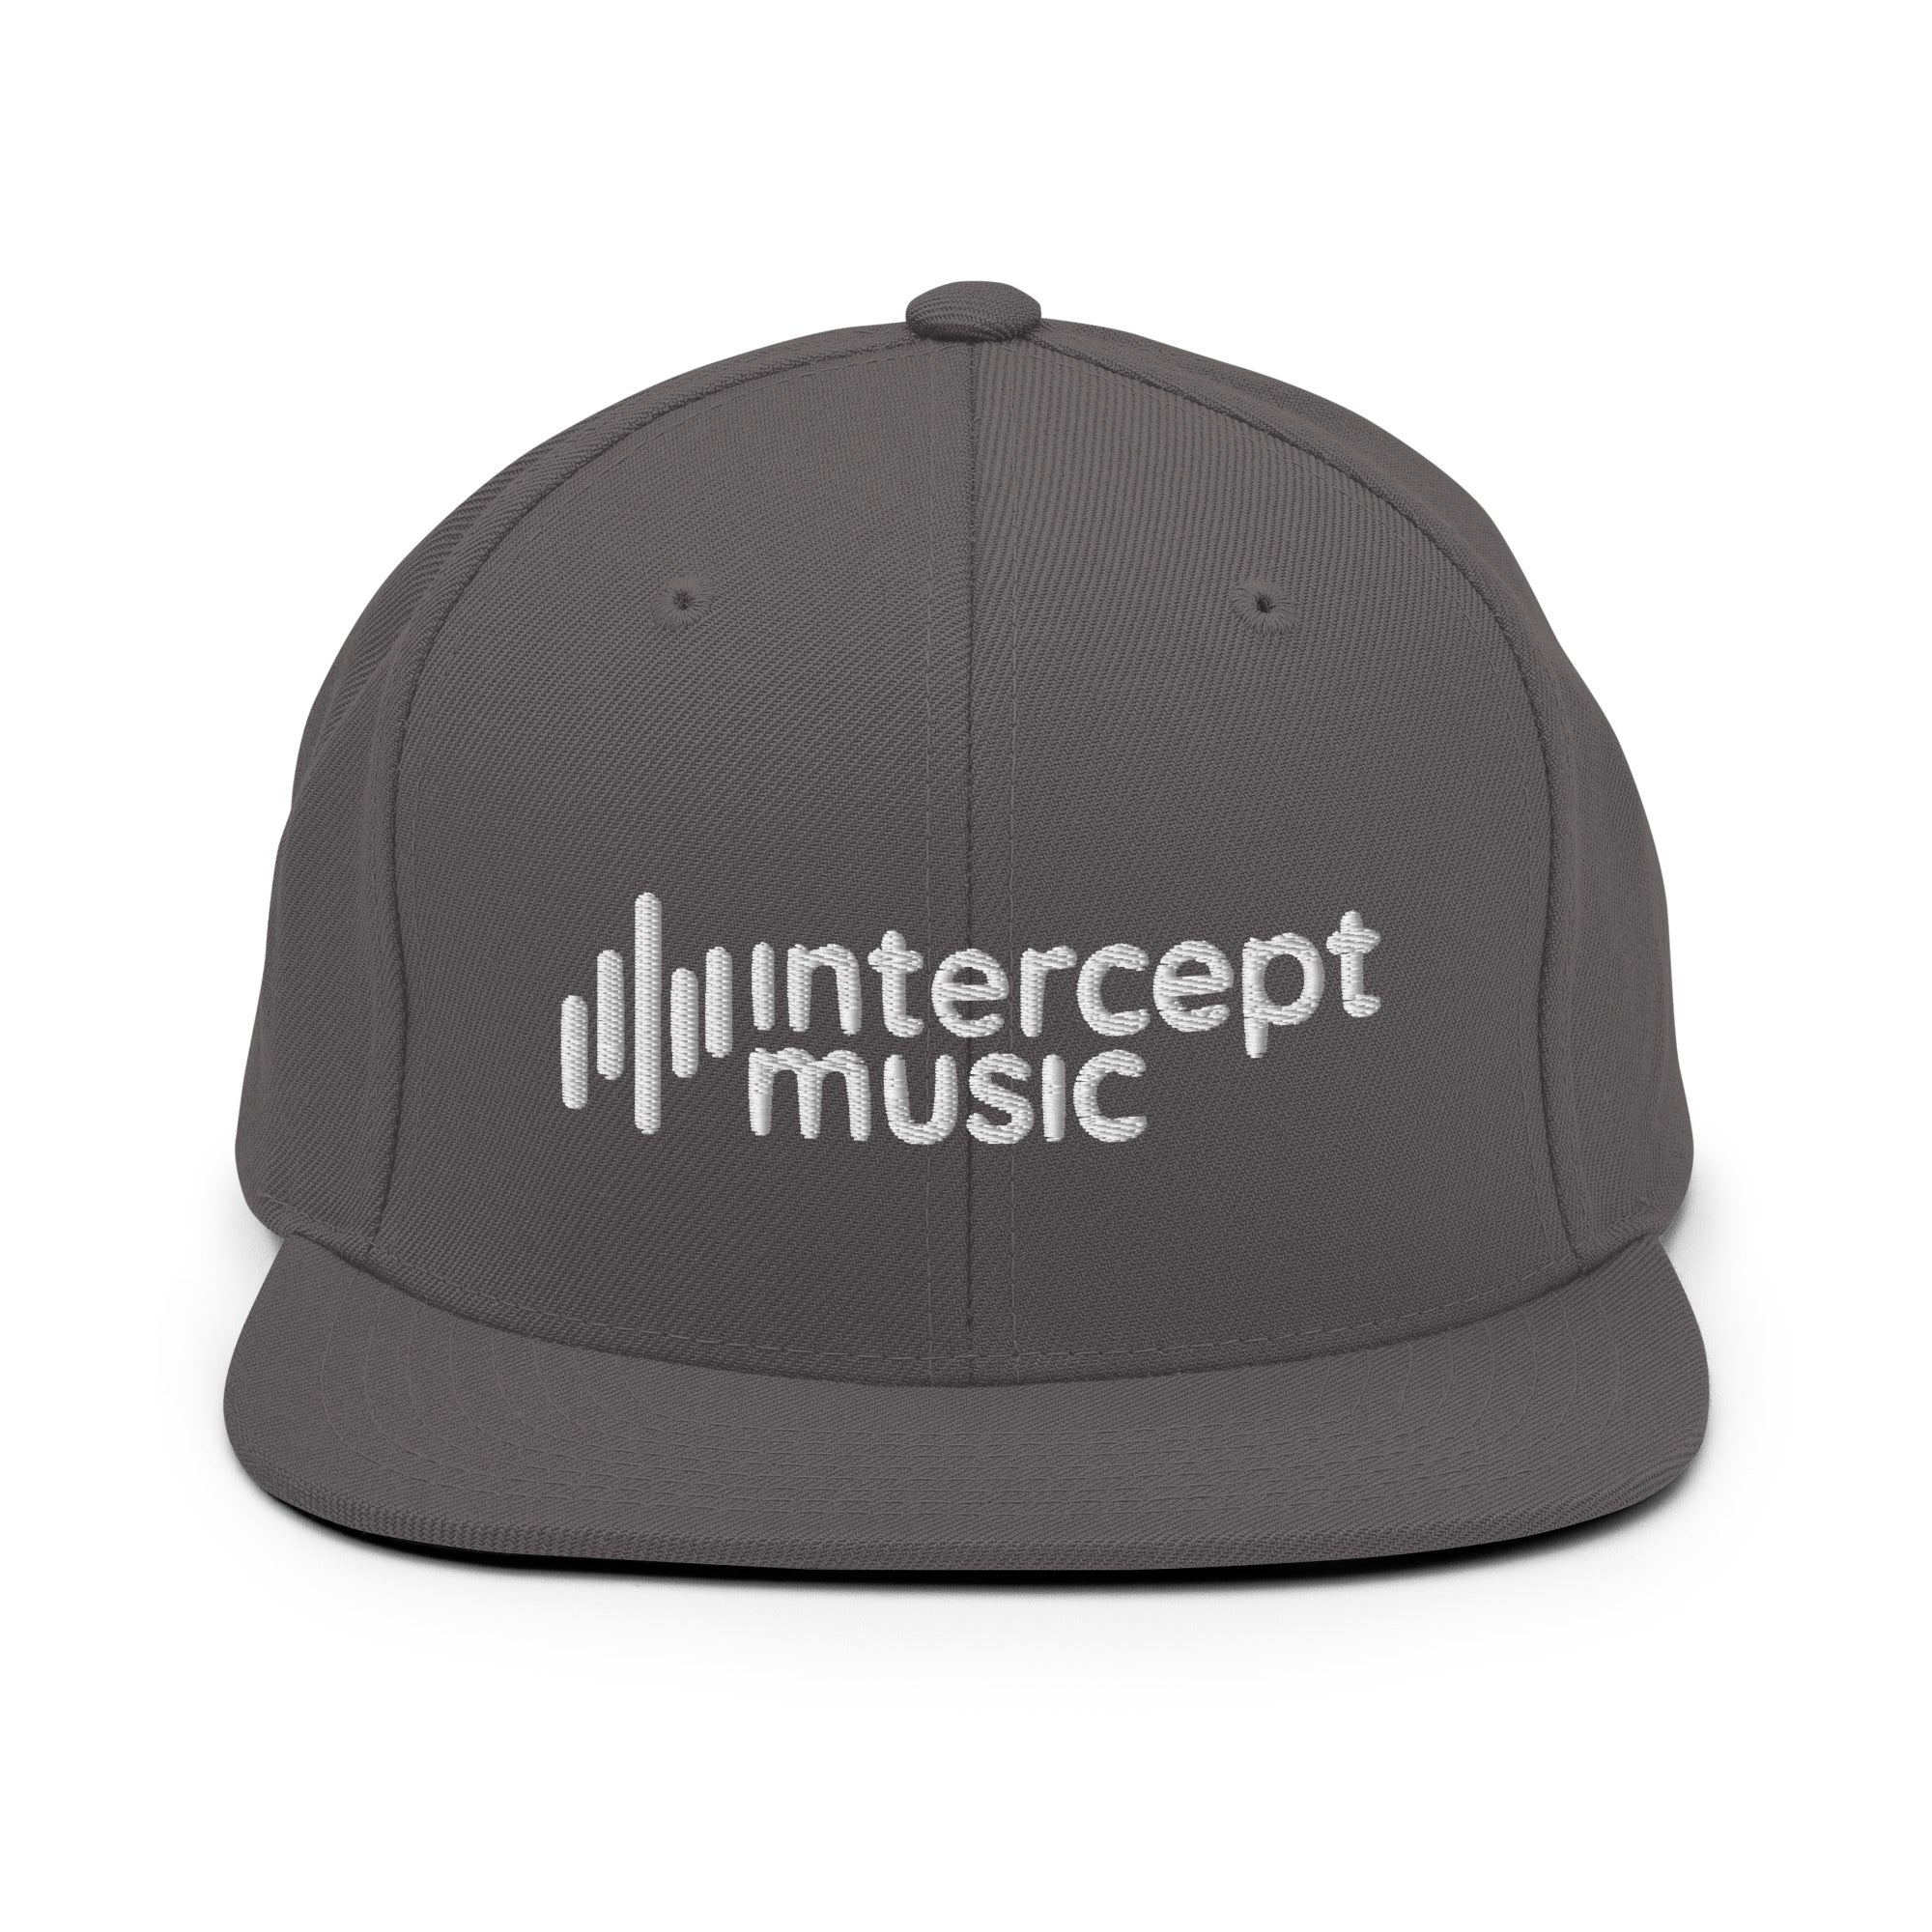 Intercept Music - Snapback Hat